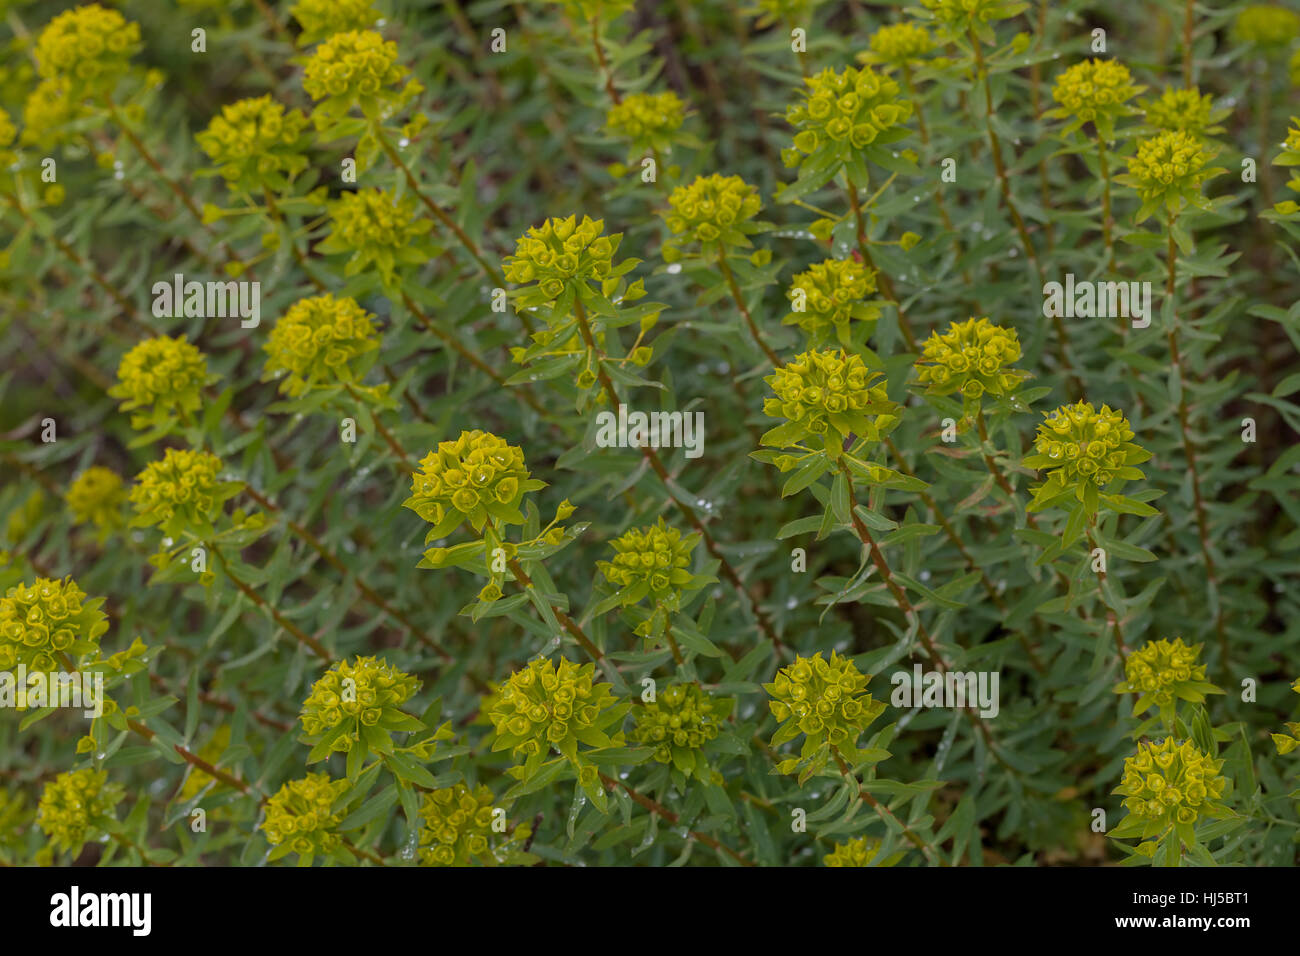 gelbe Euphorbien vor der Blüte in der Natur, geringe Schärfentiefe Hinweis Stockfoto